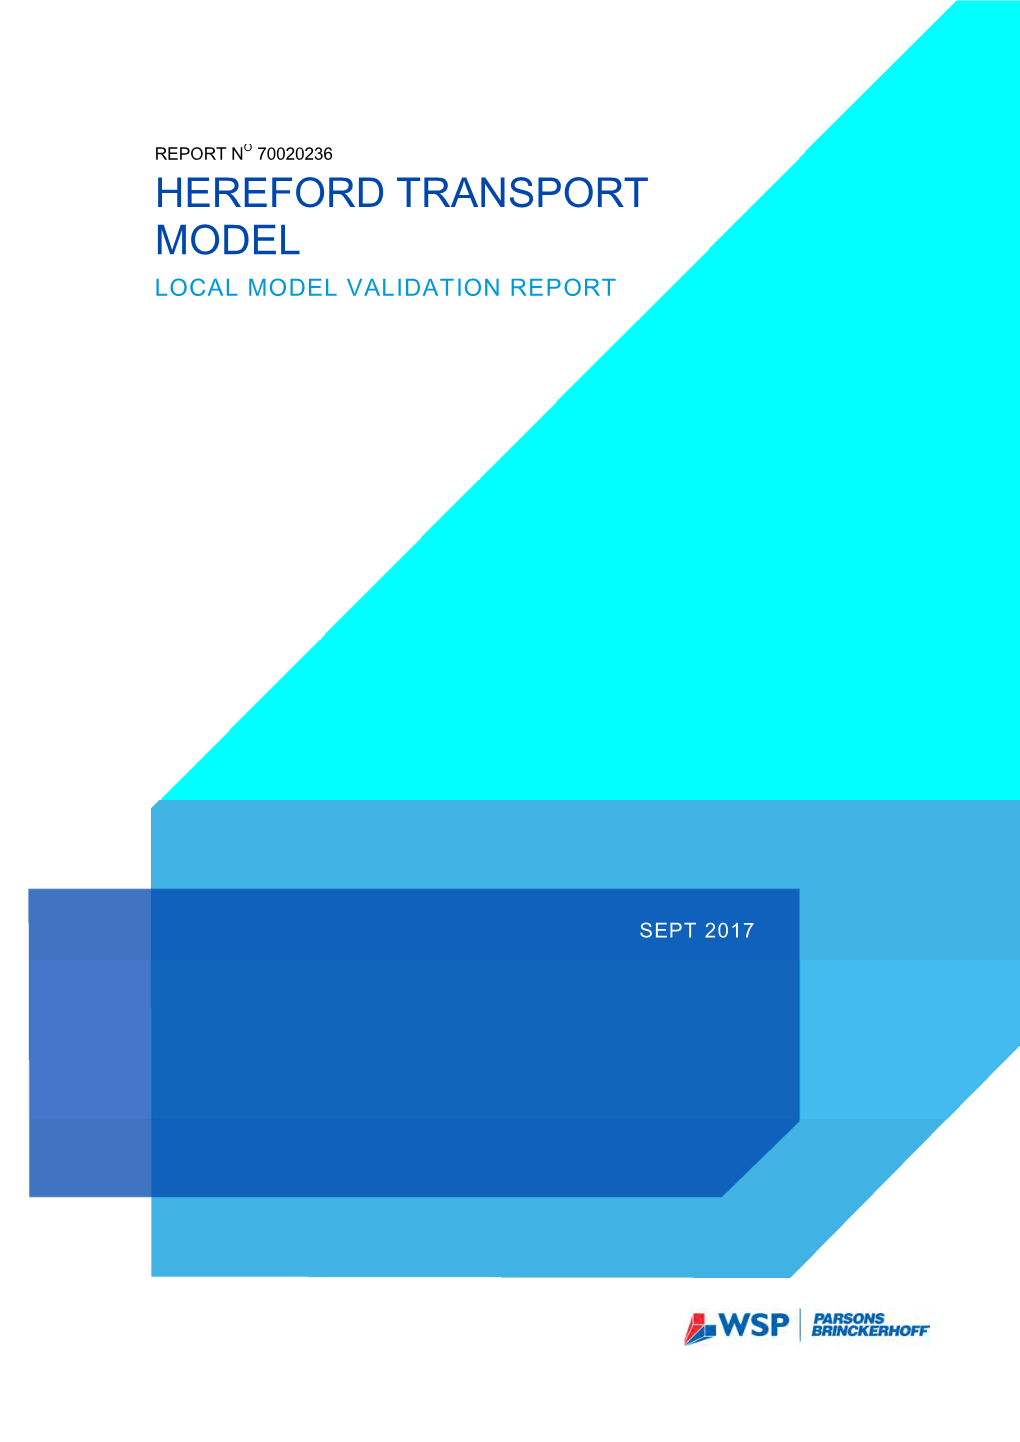 Hereford Transport Model Local Model Validation Report